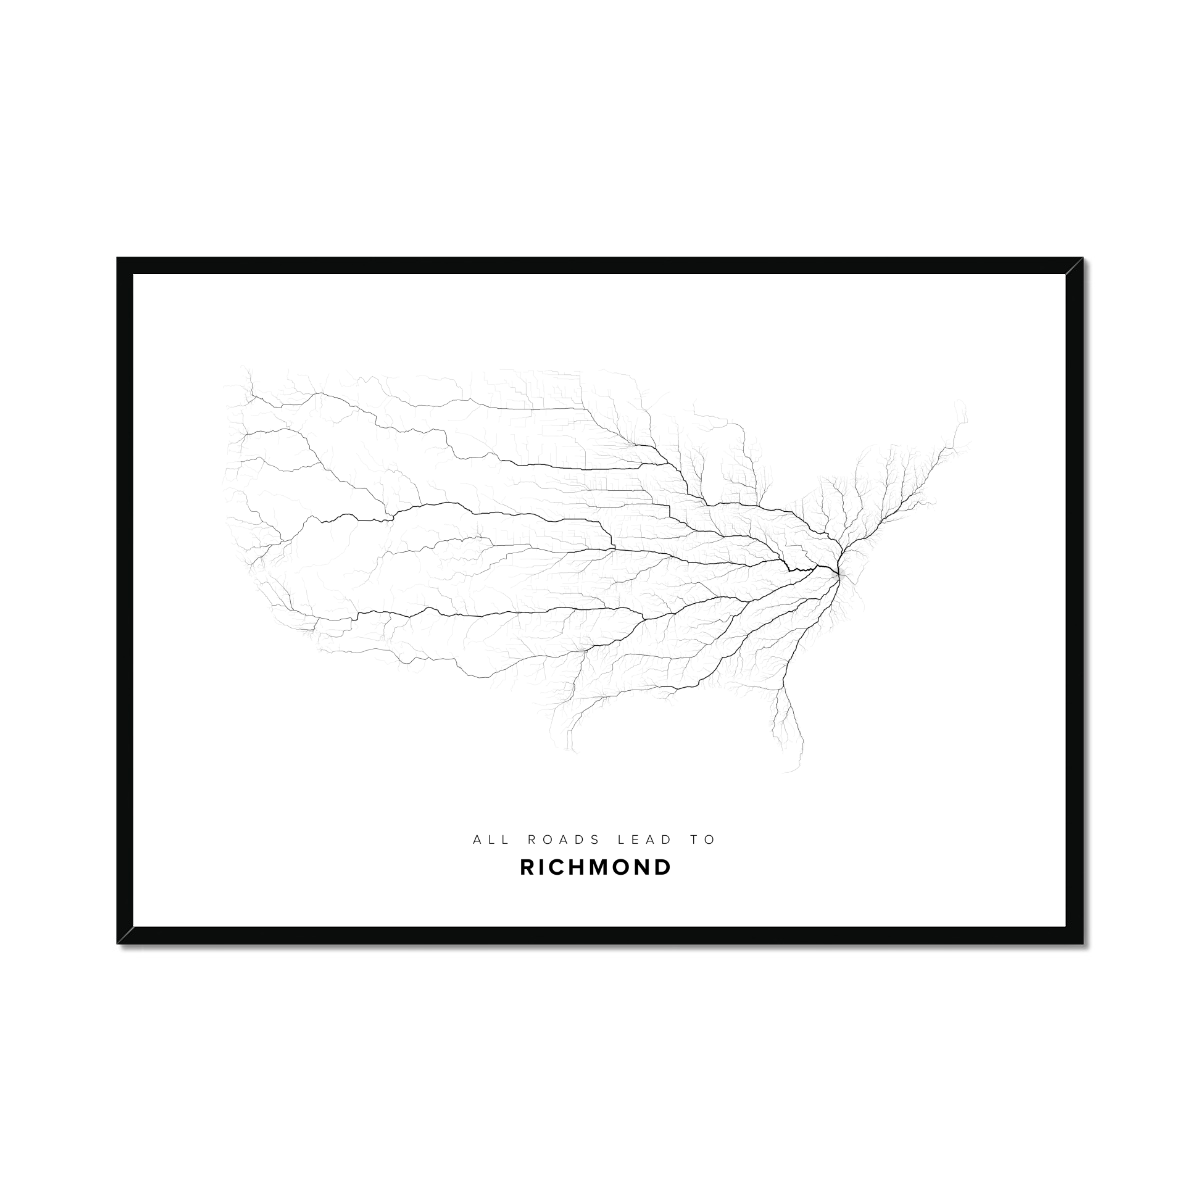 All roads lead to Richmond (United States of America) Fine Art Map Print